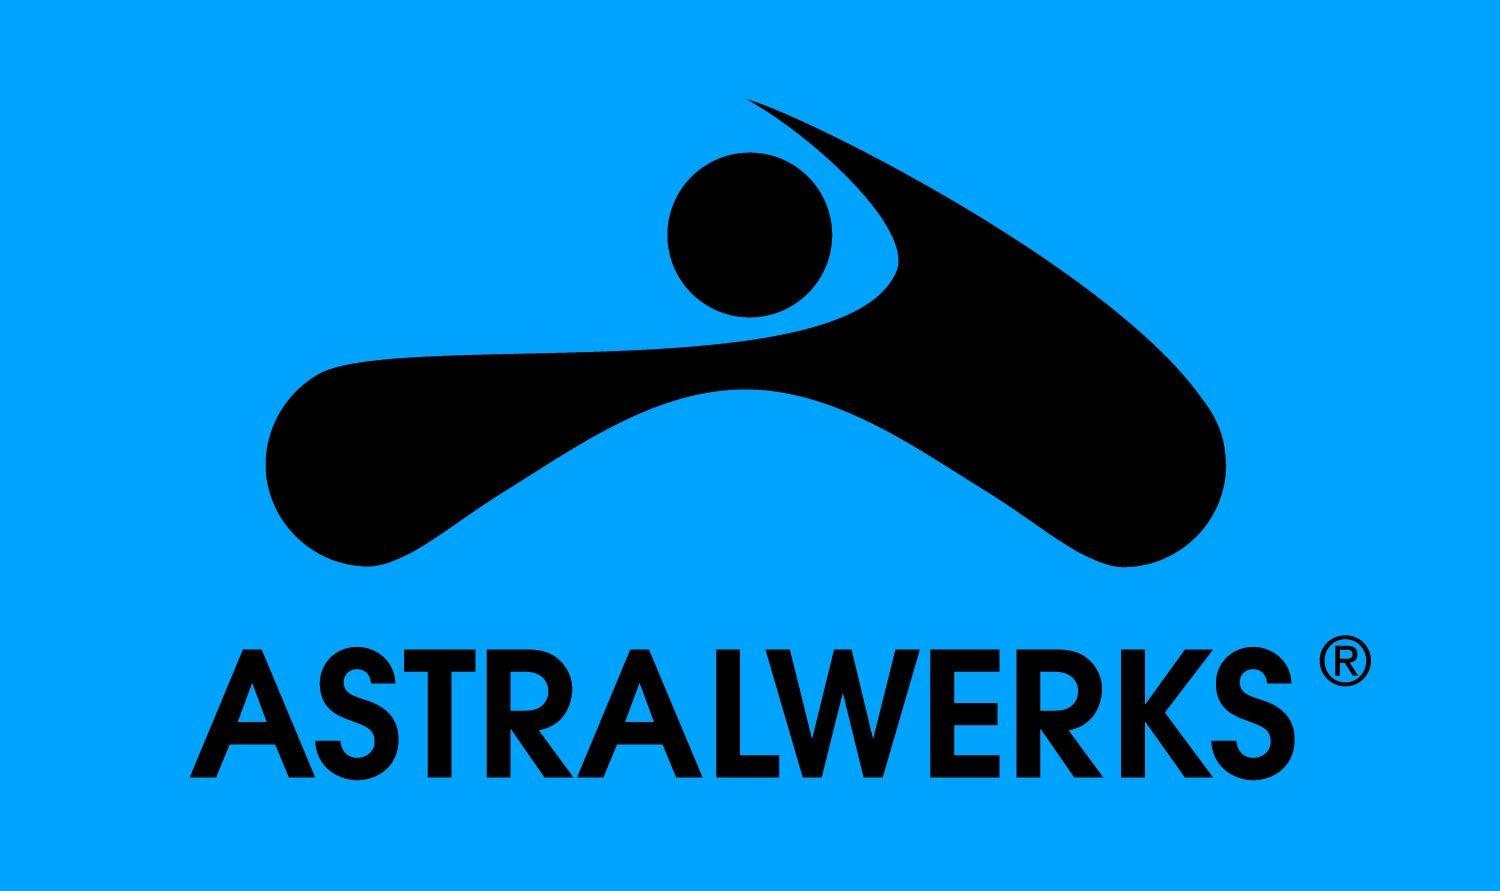 Astralwerks Logo - Astralwerks Record Label Website - The Creative Corporation